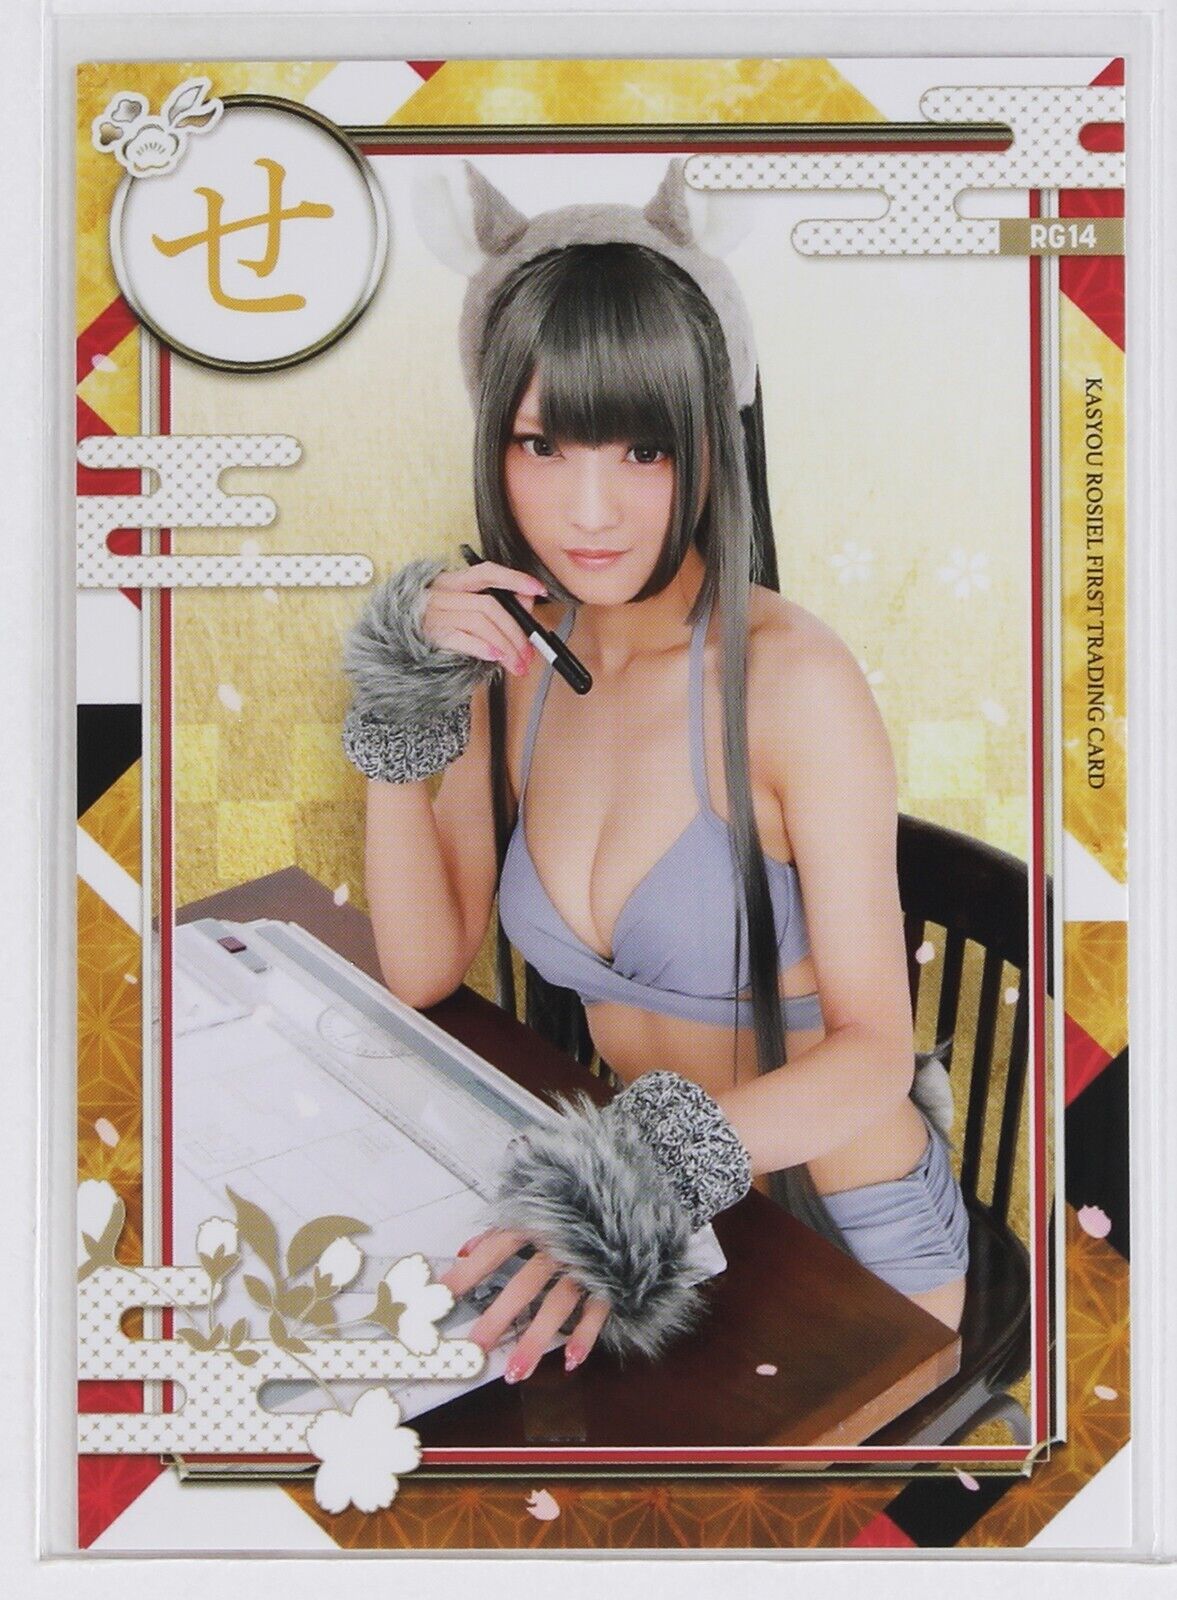 KASYOU ROSIEL RG14 - Japanese  Bikini Model & Cosplayer - FIRST TRADING CARD